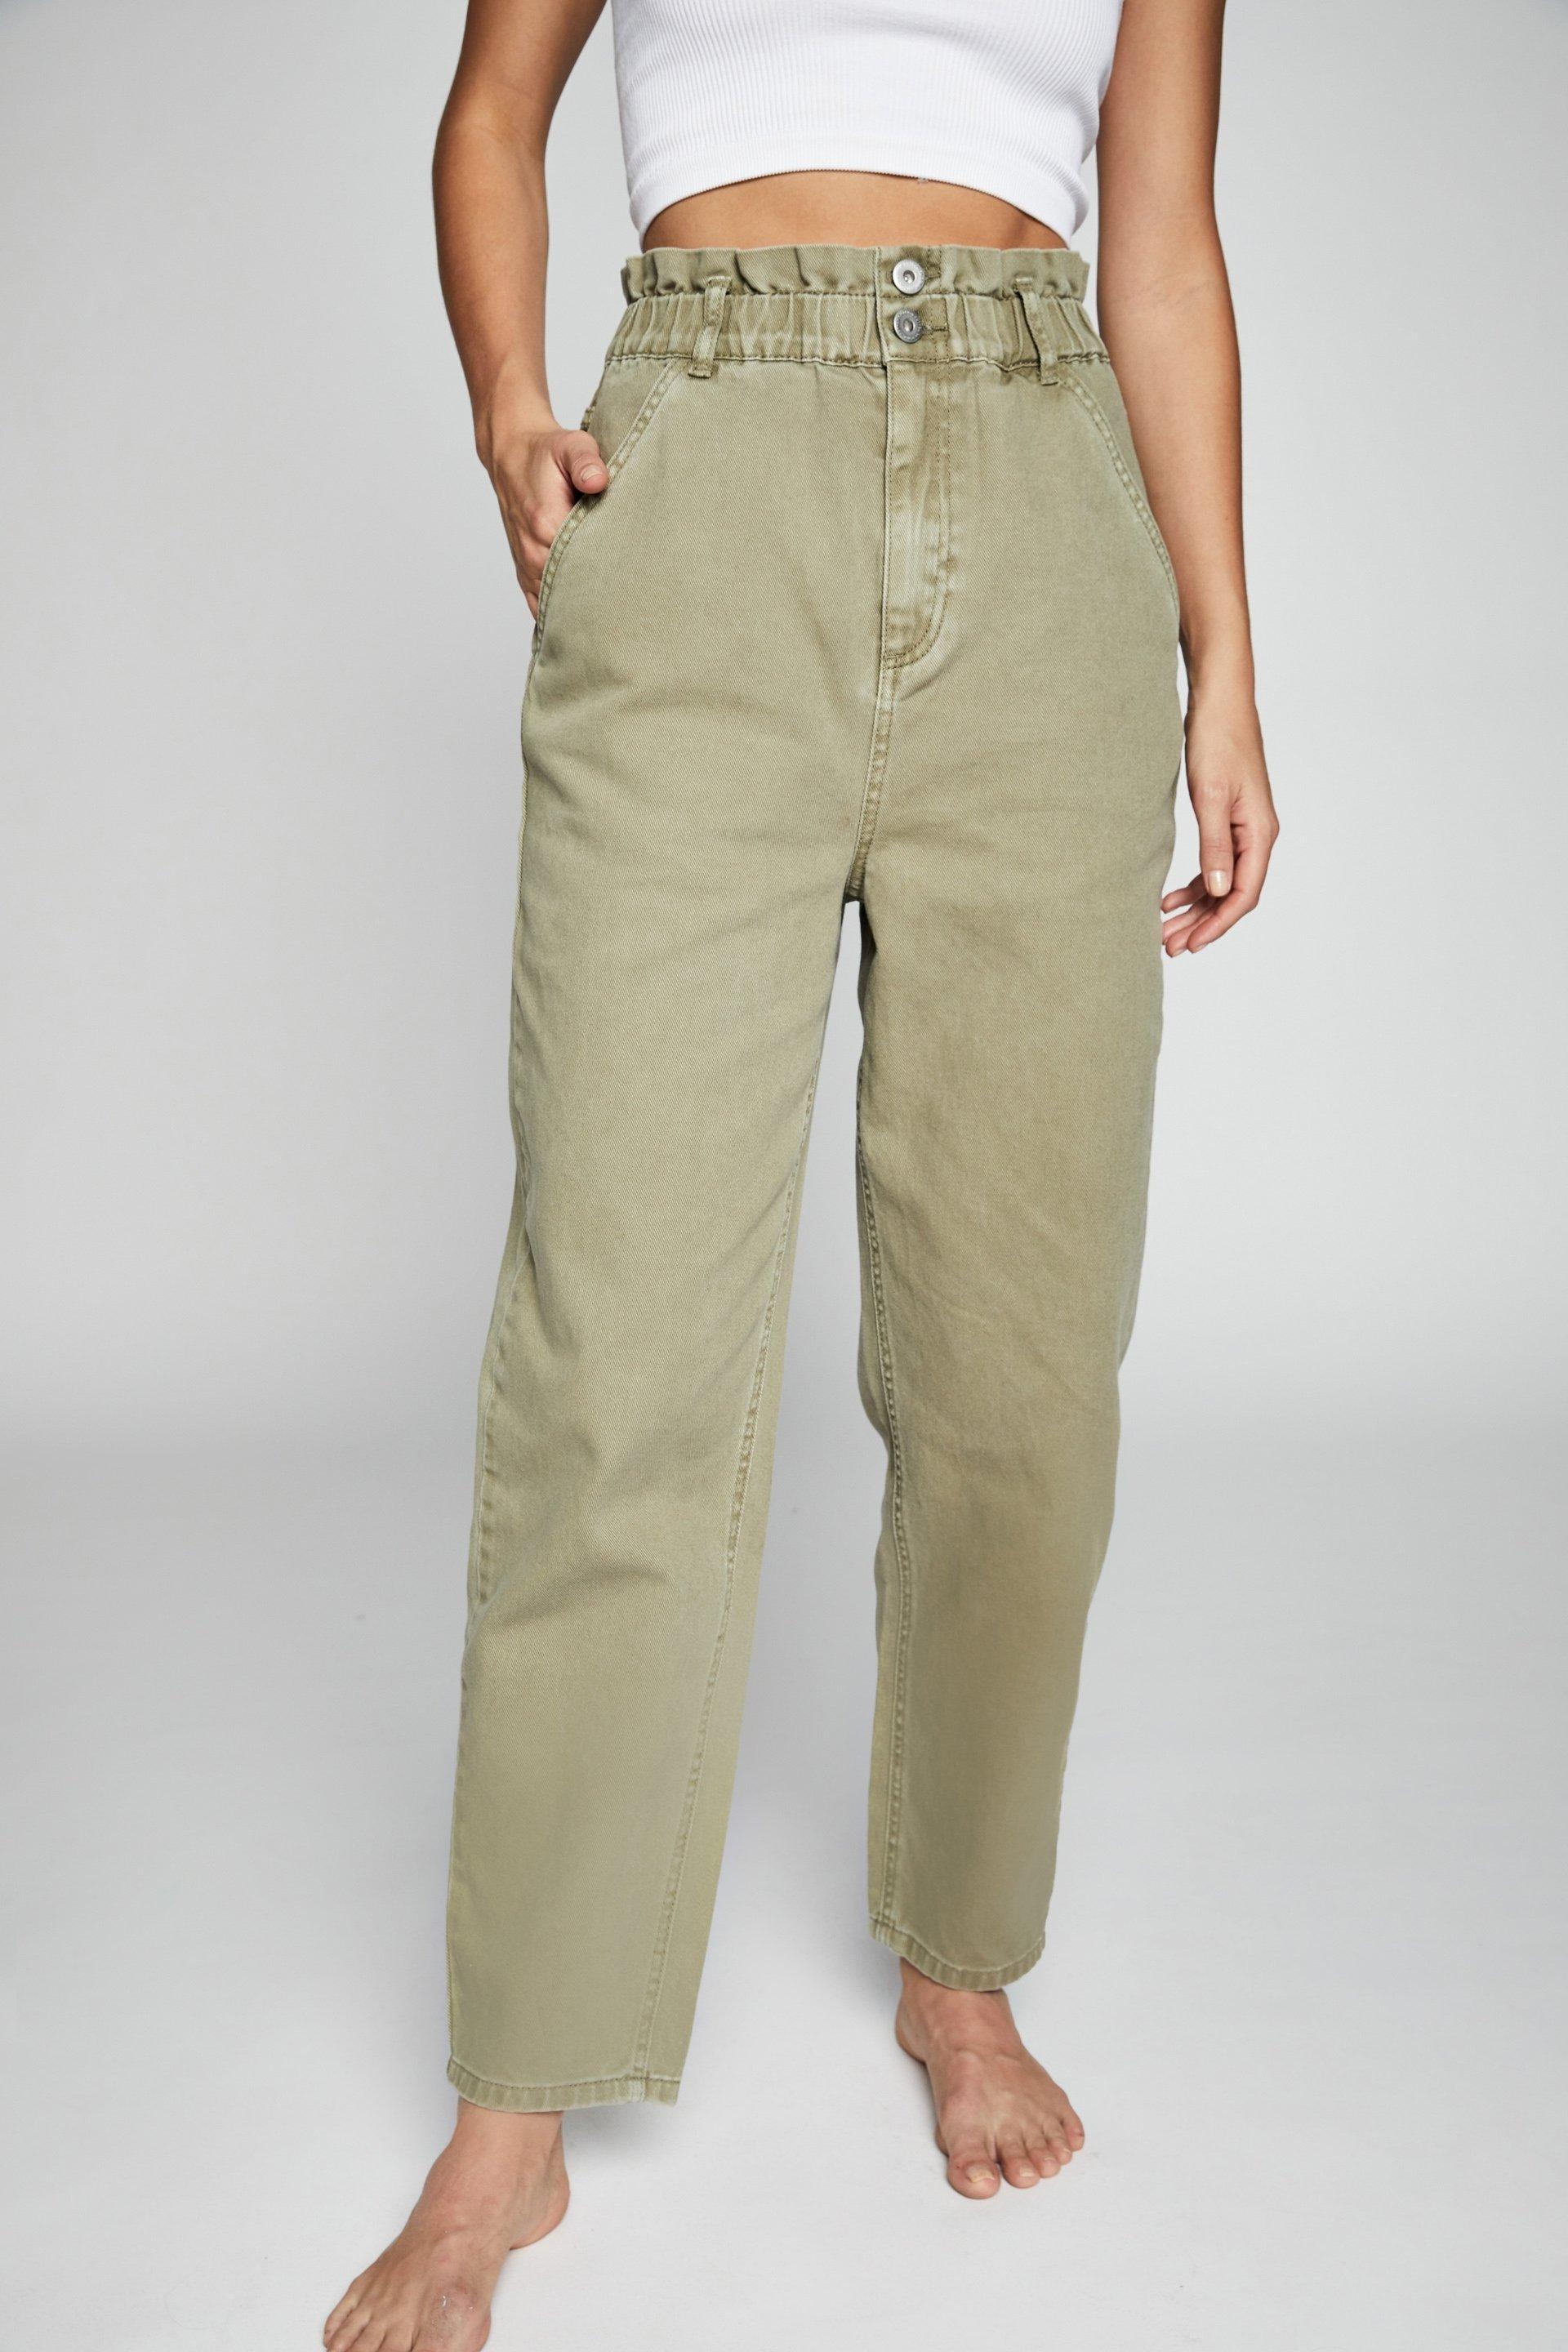 Paperbag jean - tea Cotton On Jeans | Superbalist.com